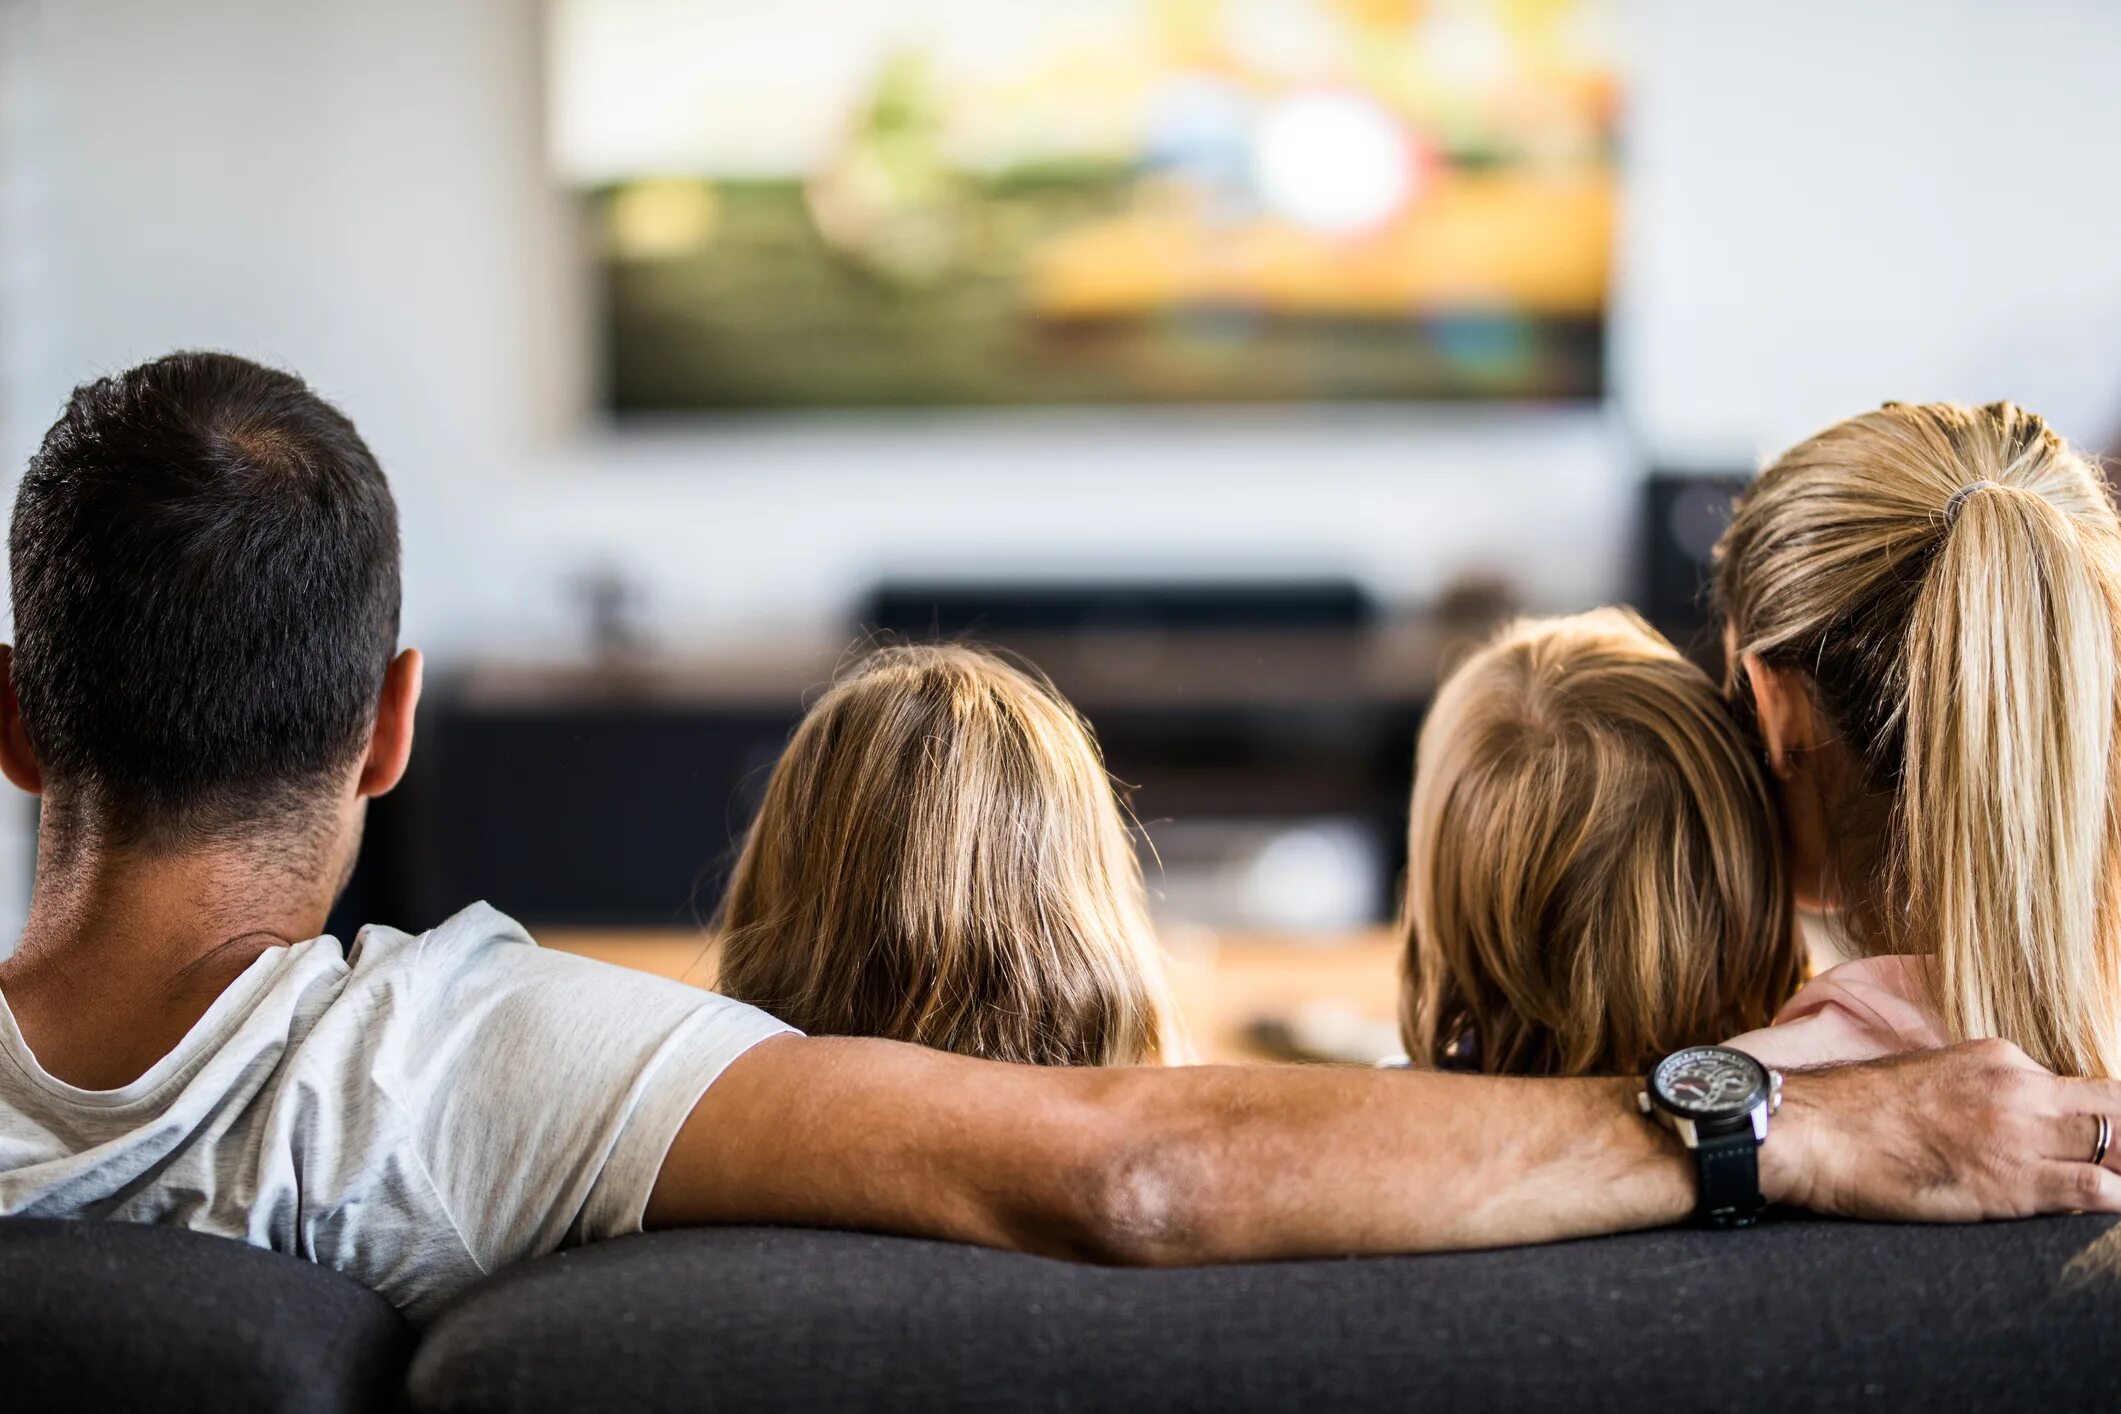 Семья смотрит тв. Семья на диване перед телевизором. Семья смотрит телевизор.